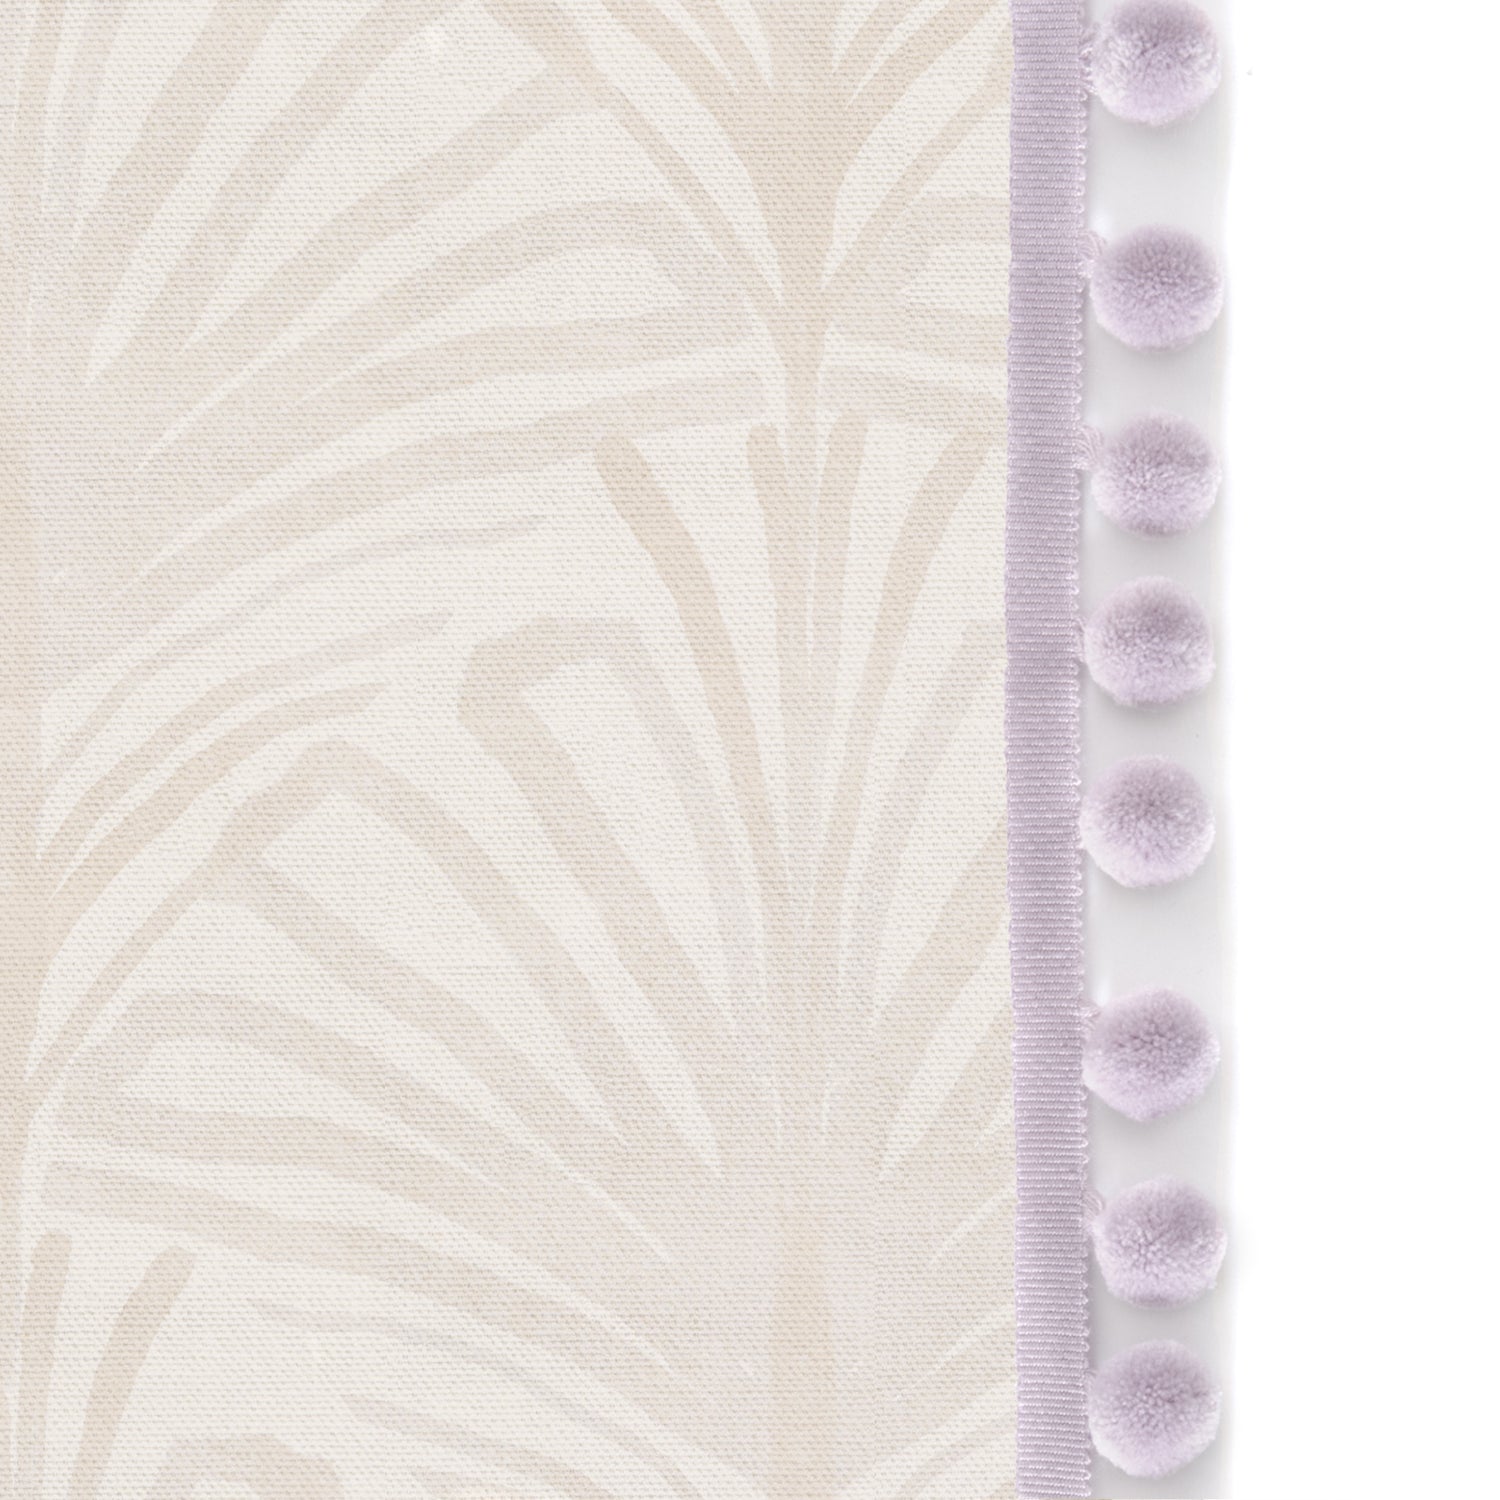 Upclose picture of Suzy Sand custom Beige Palmcurtain with lilac pom pom trim